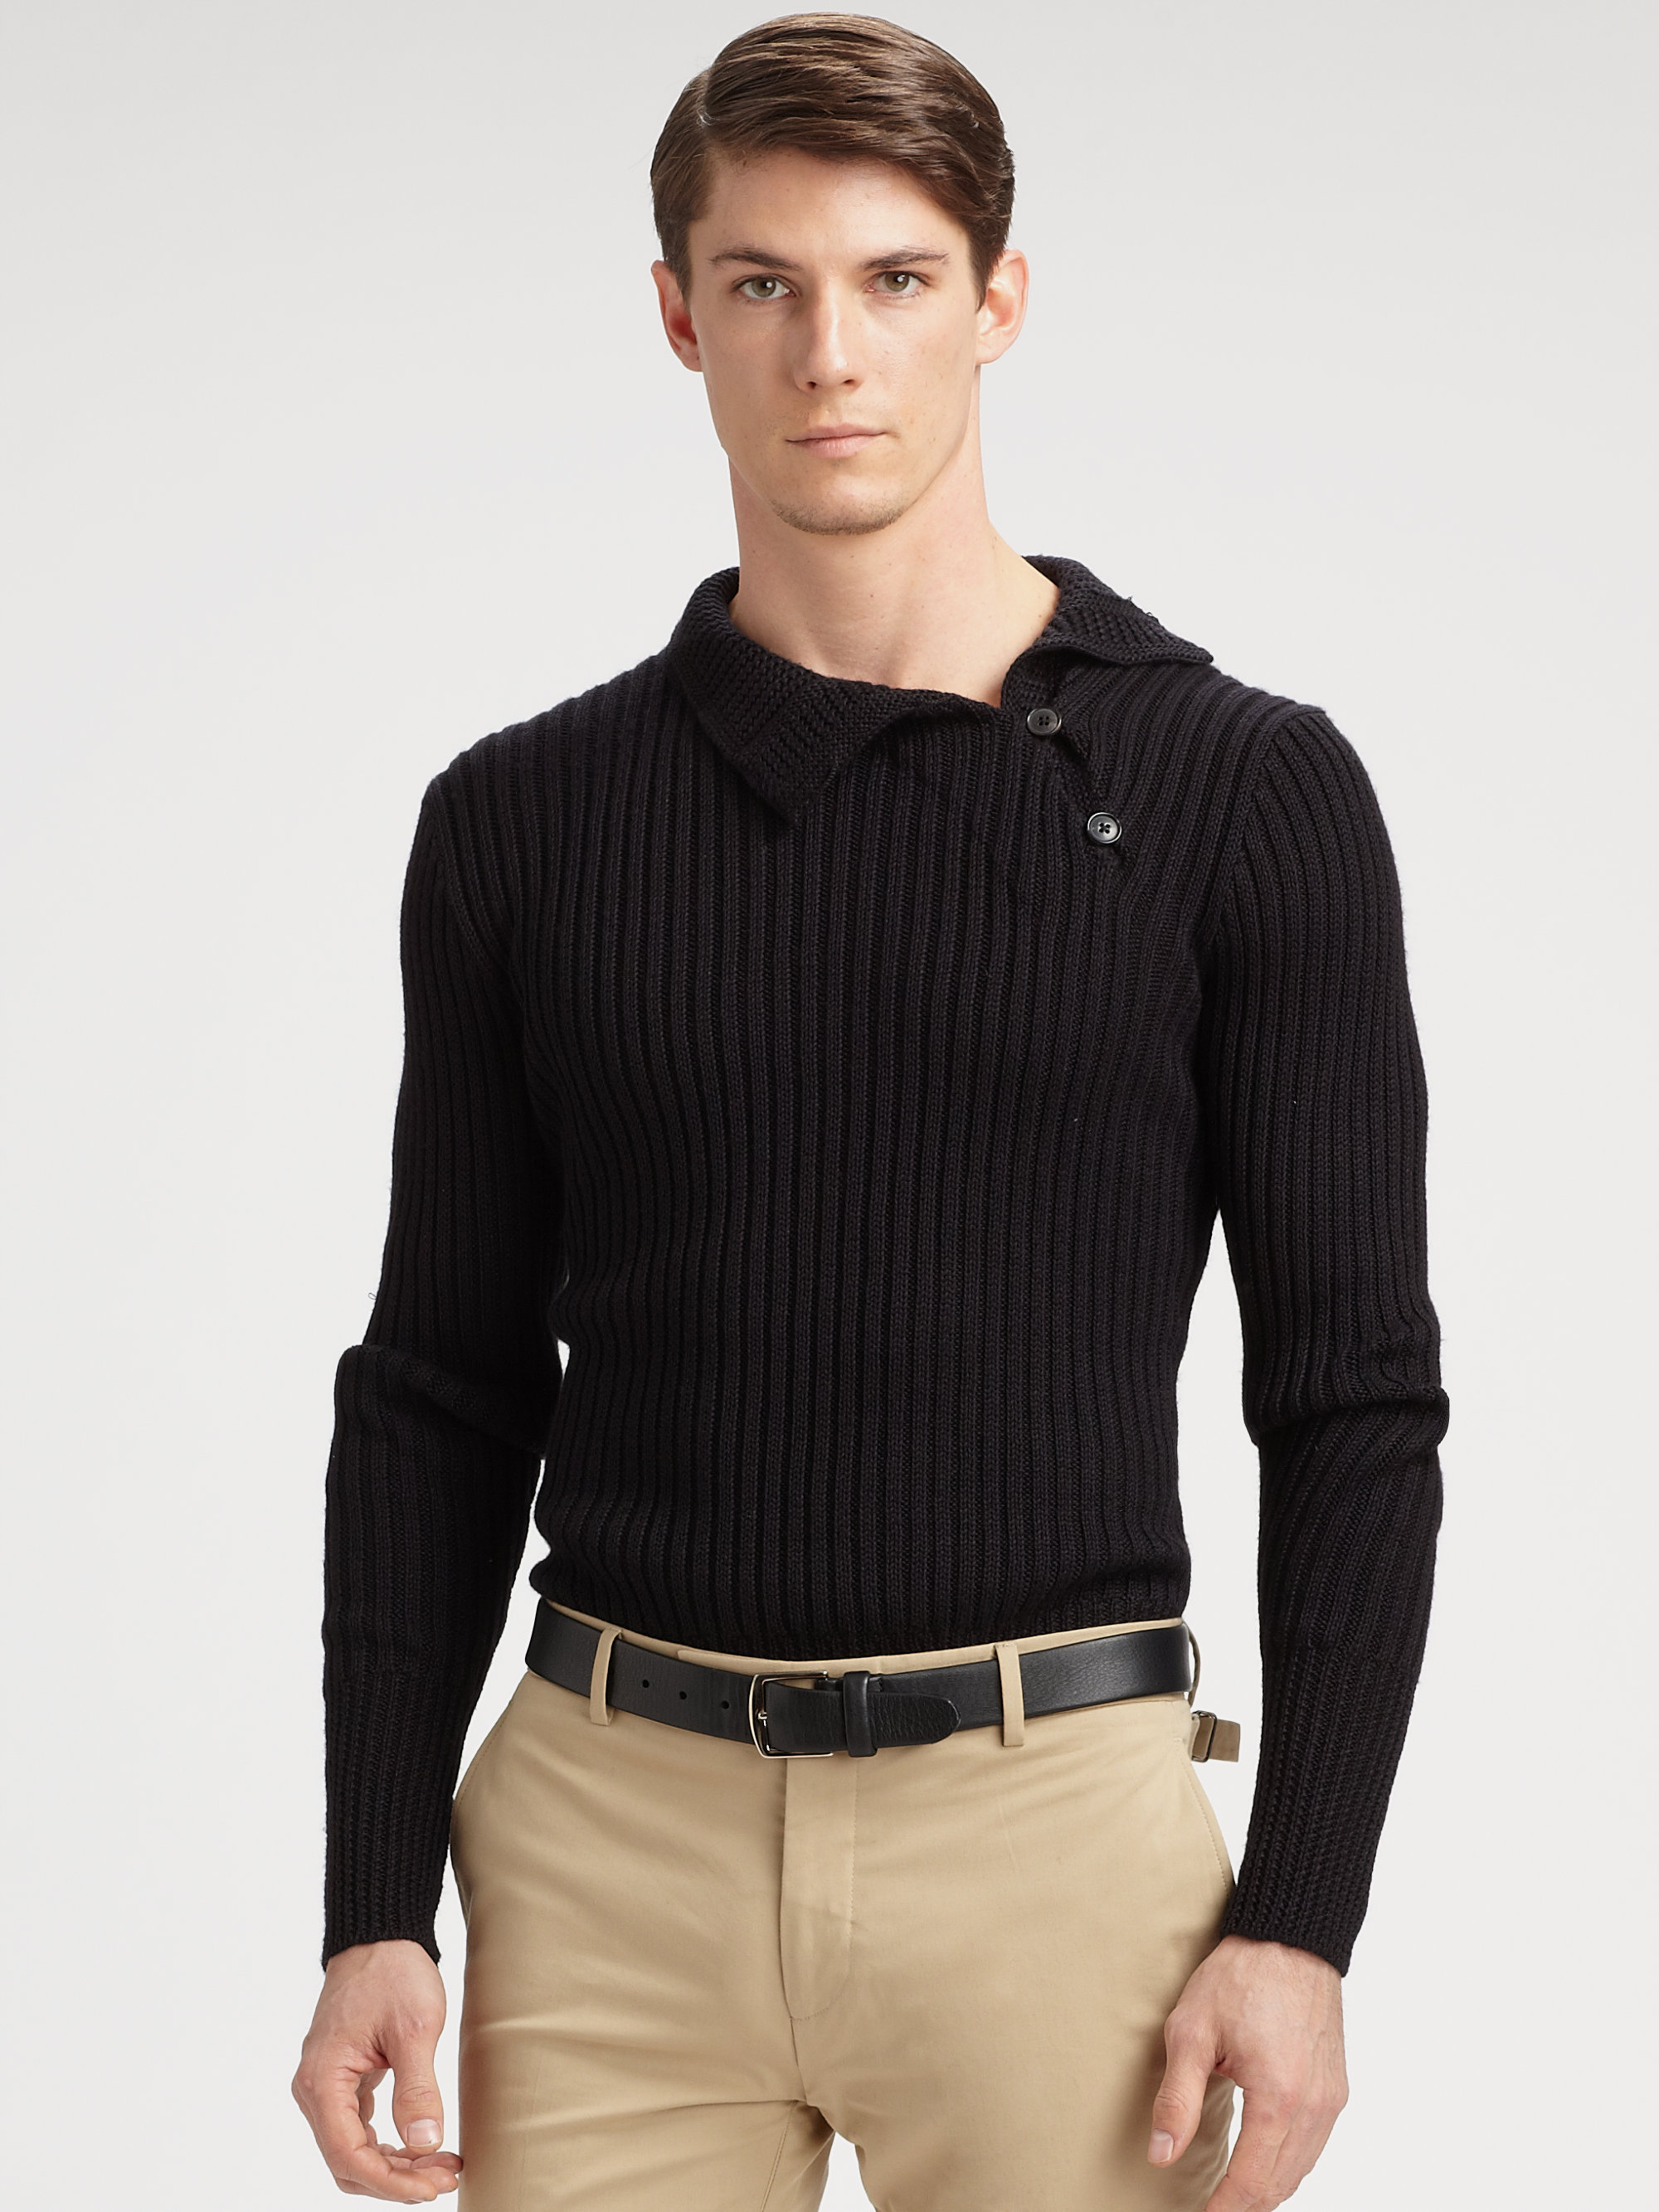 Ralph lauren black label Turtleneck Button Sweater in Black for Men | Lyst